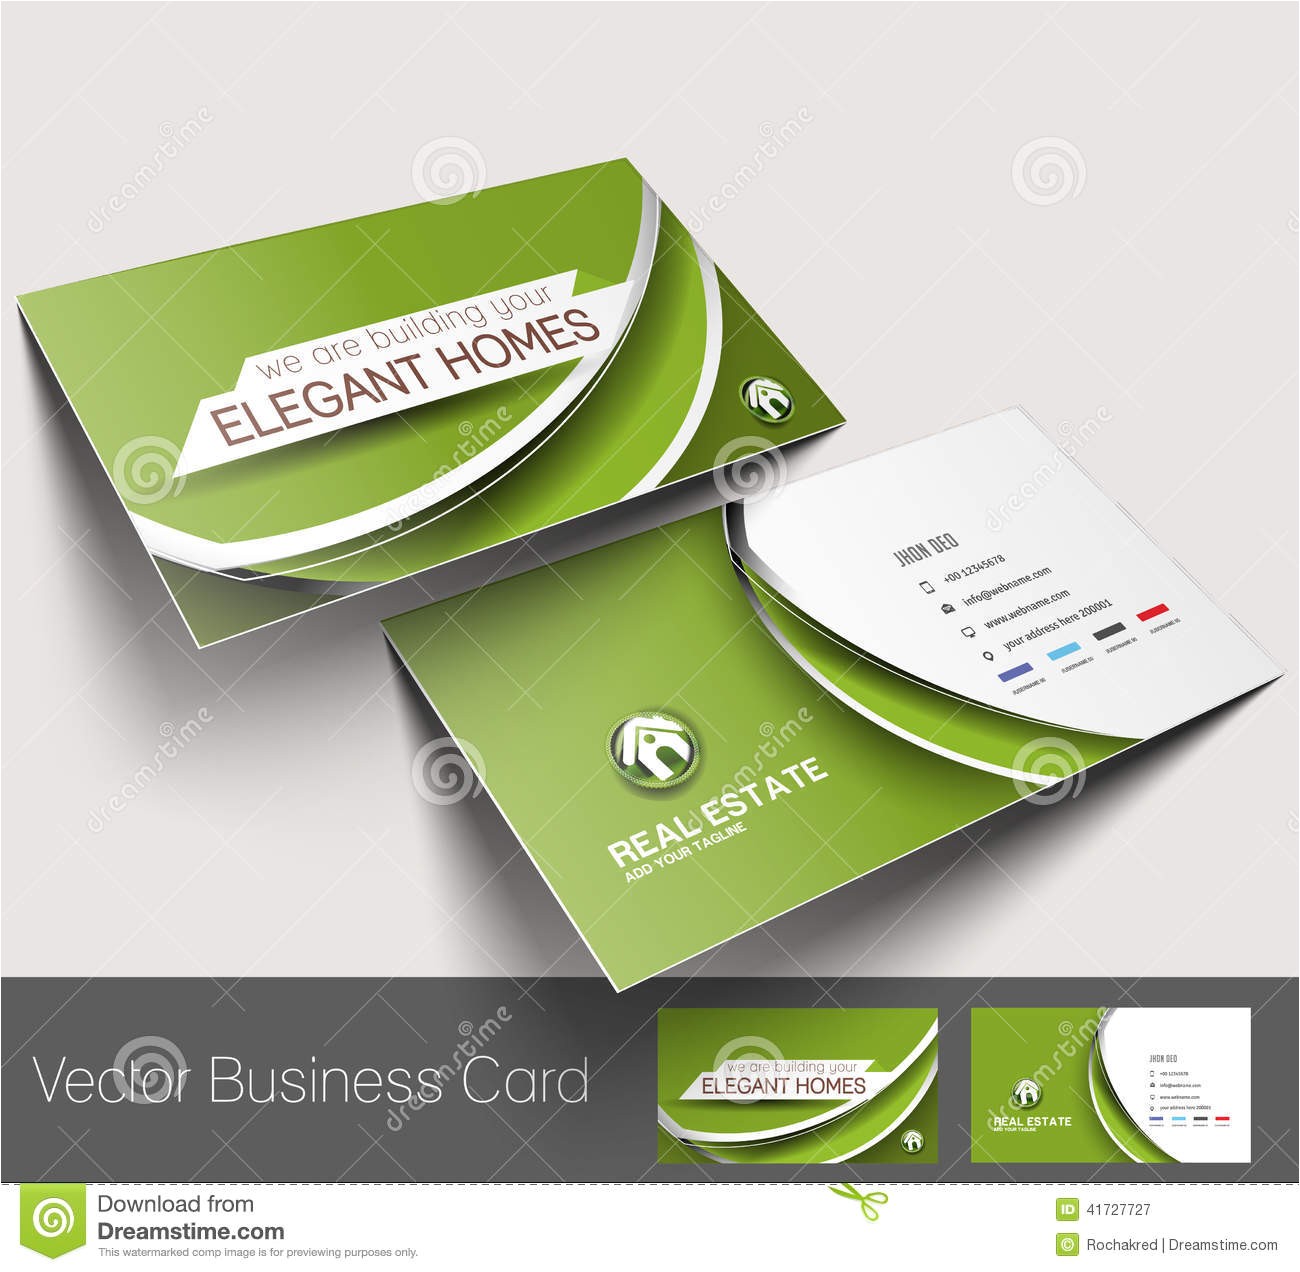 stock illustration real estate agent business card set template image41727727